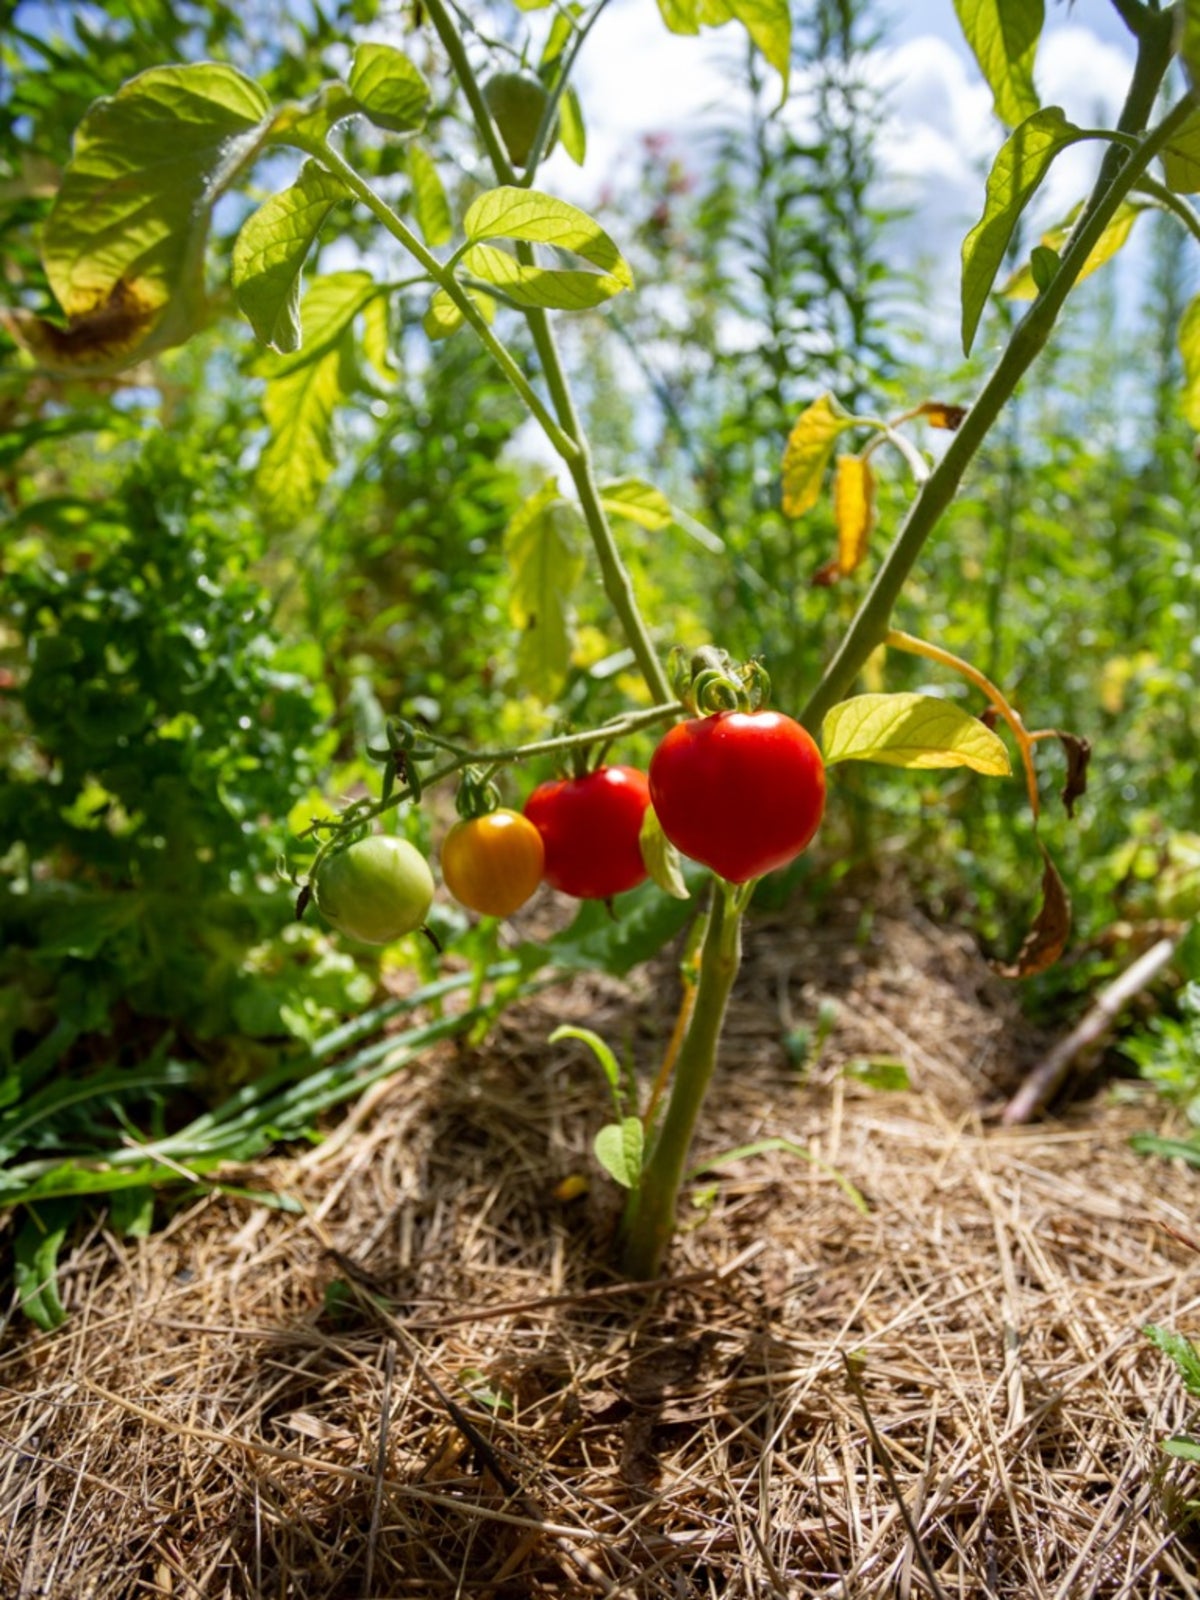 Image of Spreading mulch around tomato plants